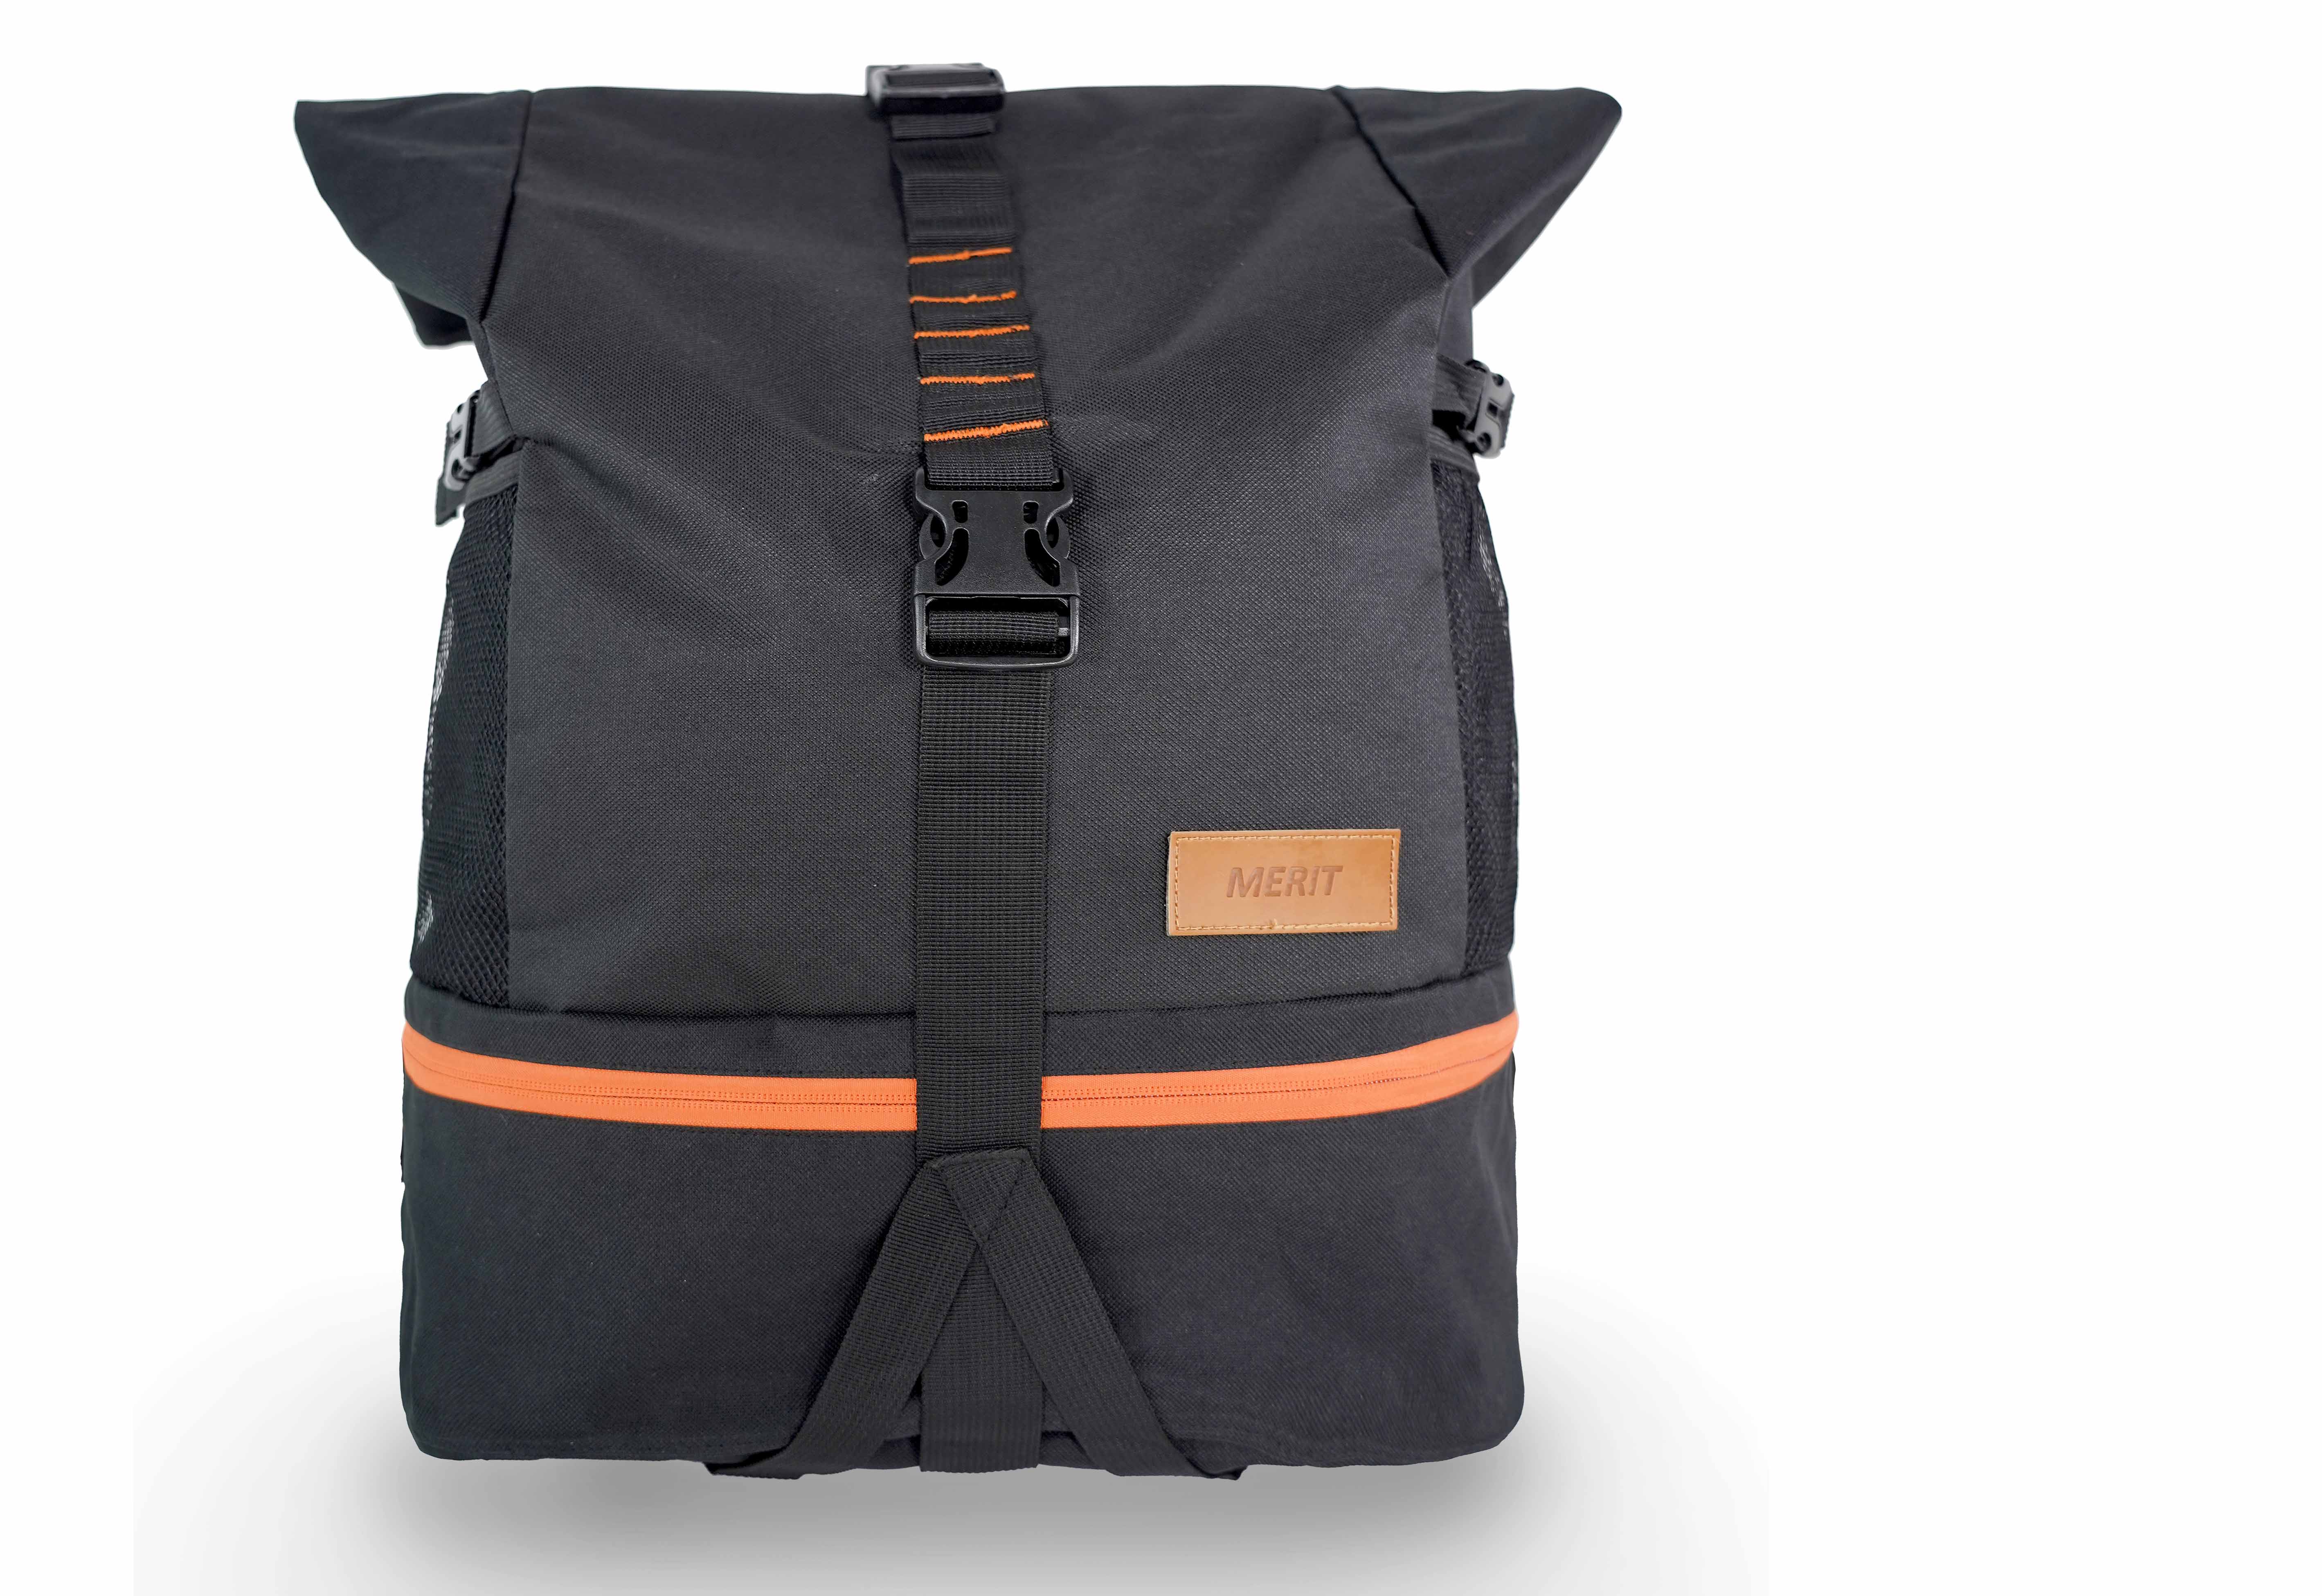 Rafting Sport Camping Hiking Outdoor sport bag waterproof foldable travel backpack